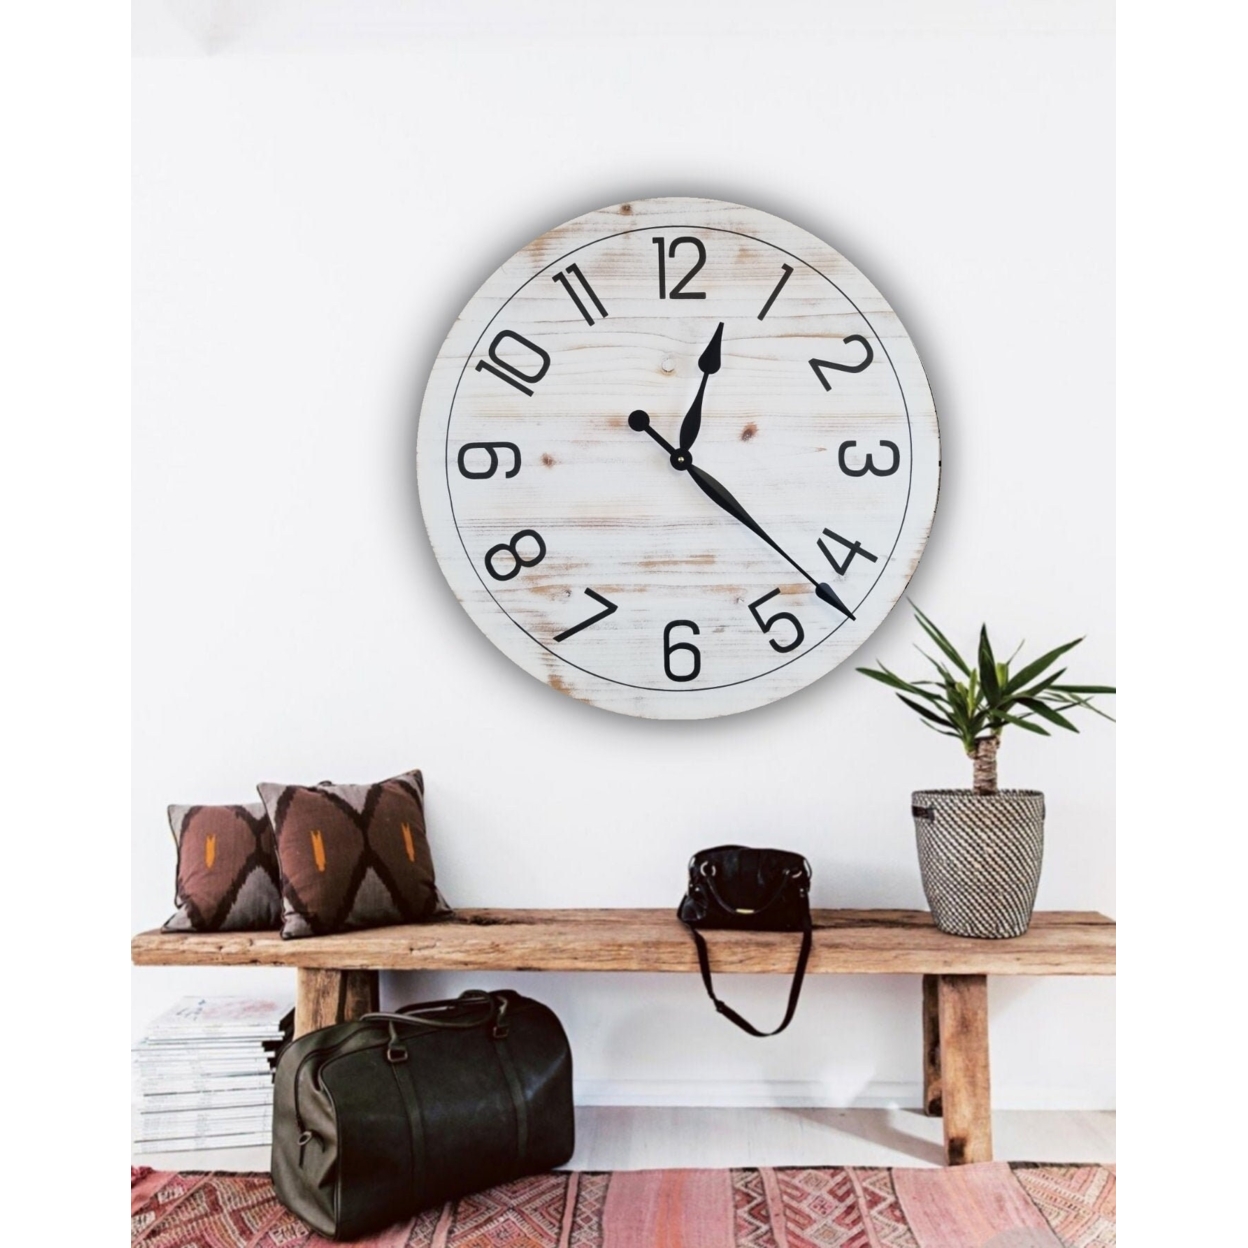 The Layla Farmhouse clock - rustic clock - over sized wall clock - big clock - large clock - farmhouse decor - rustic decor - - 30 INCH